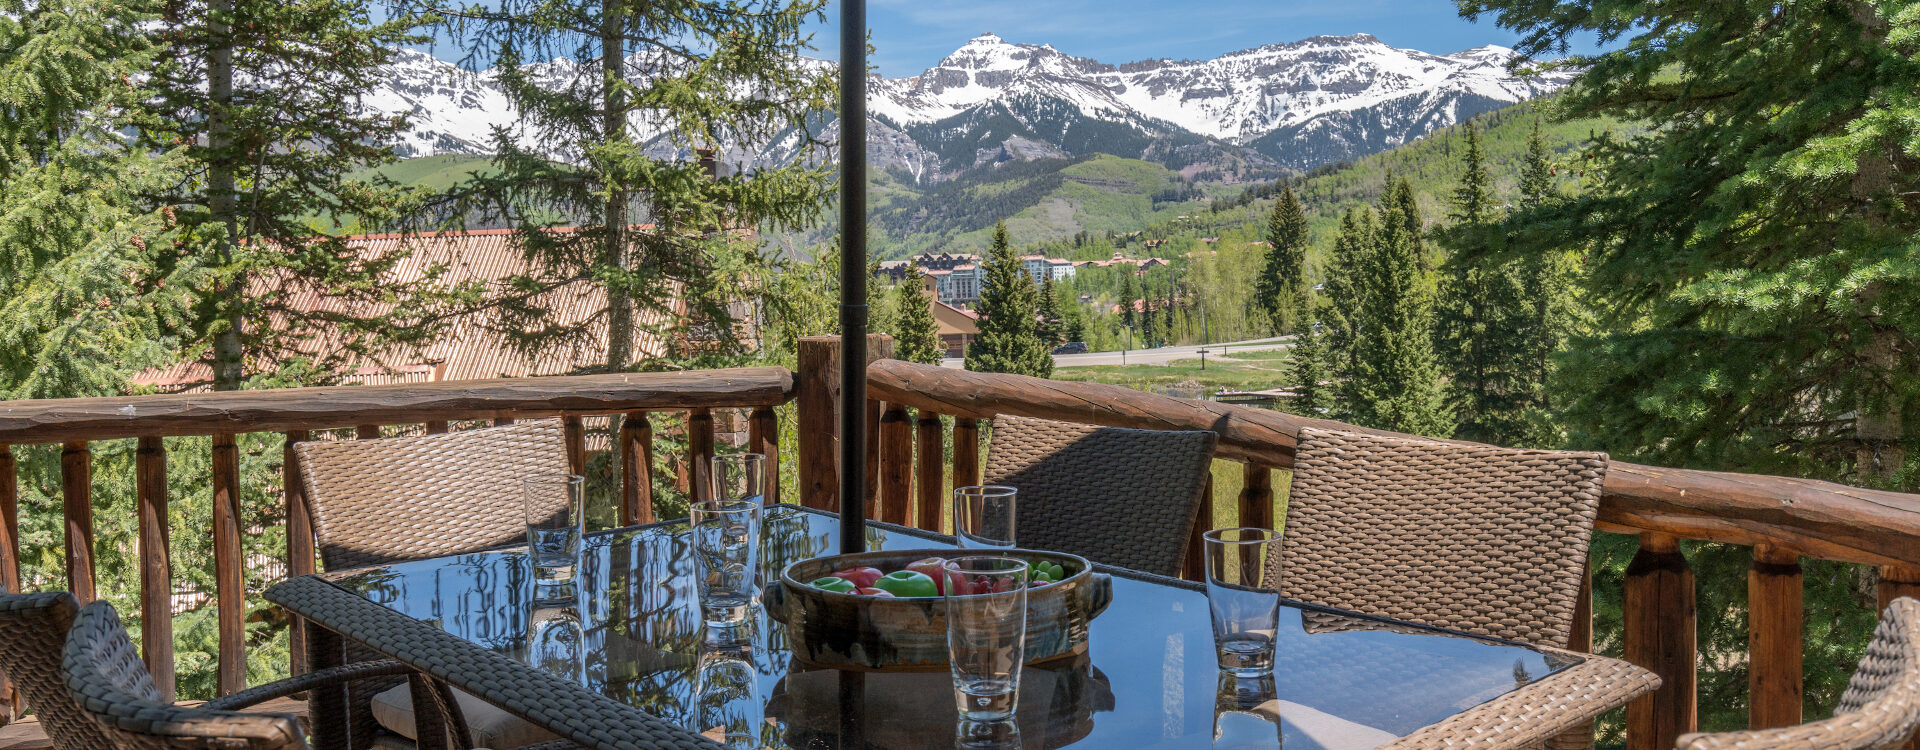 7.03-mountain-village-mountain-melody-deck-outdoor-dining-Web